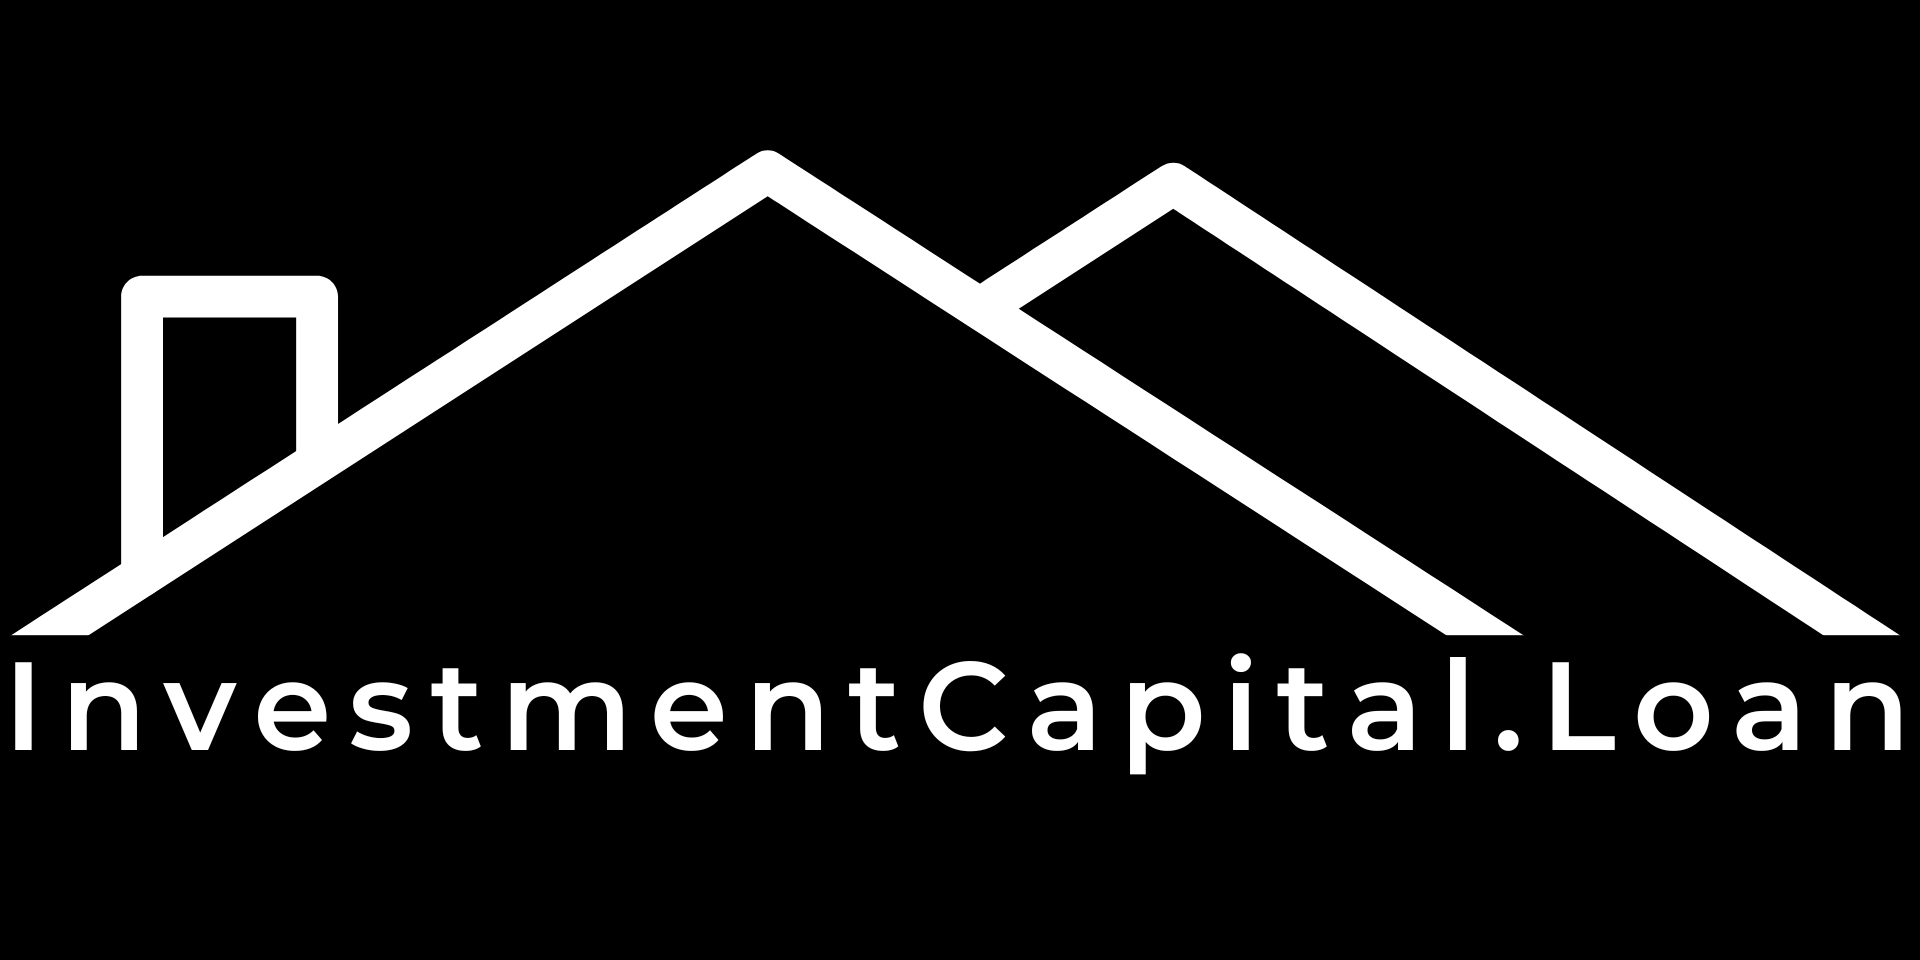 InvestmentCapital.Loan